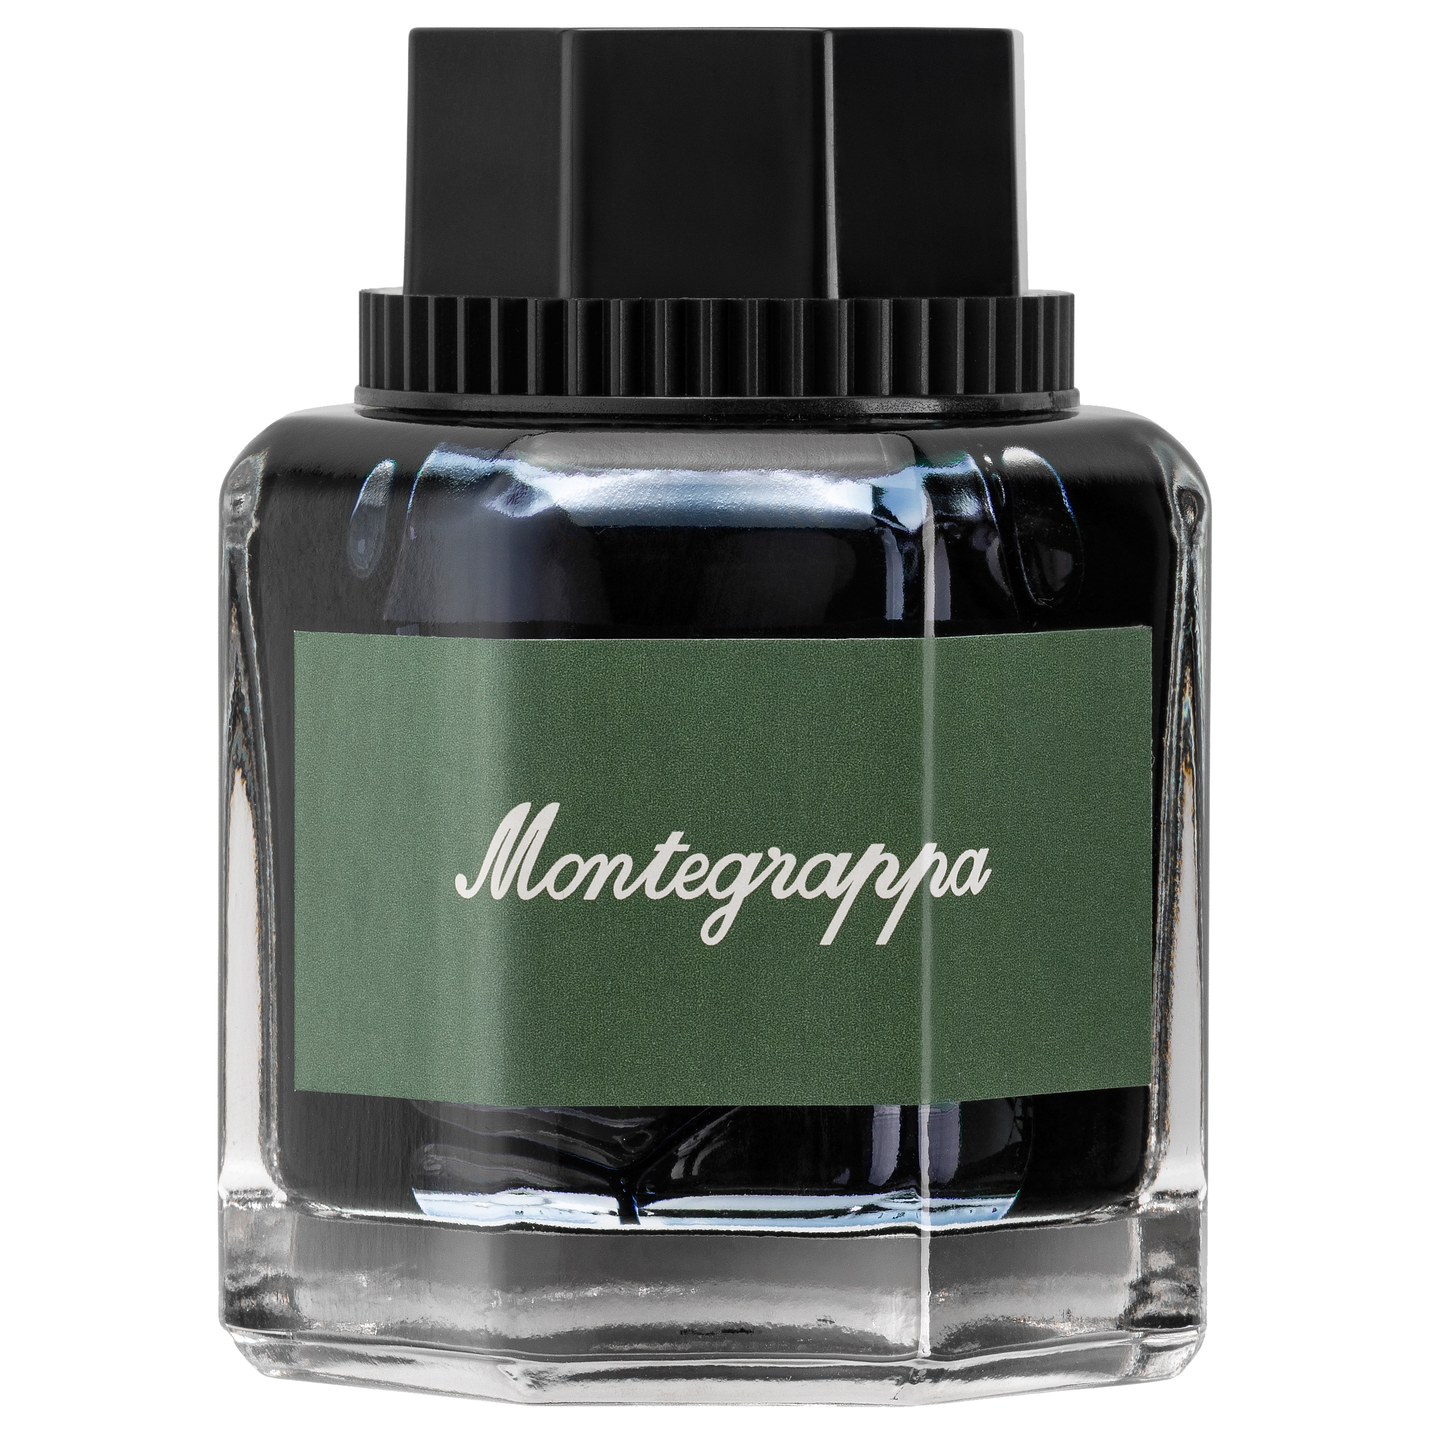 Montegrappa Tinte Eucalypt 50ml - Green packaging